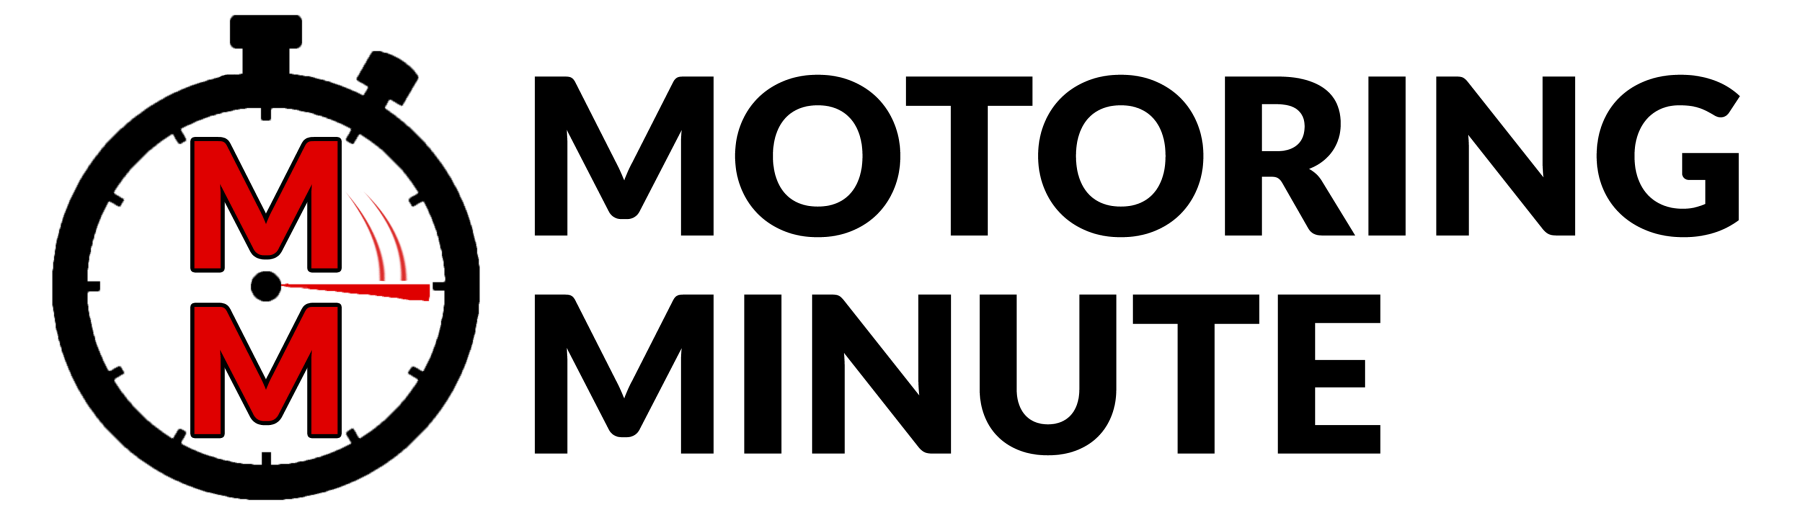 Motoring Minute